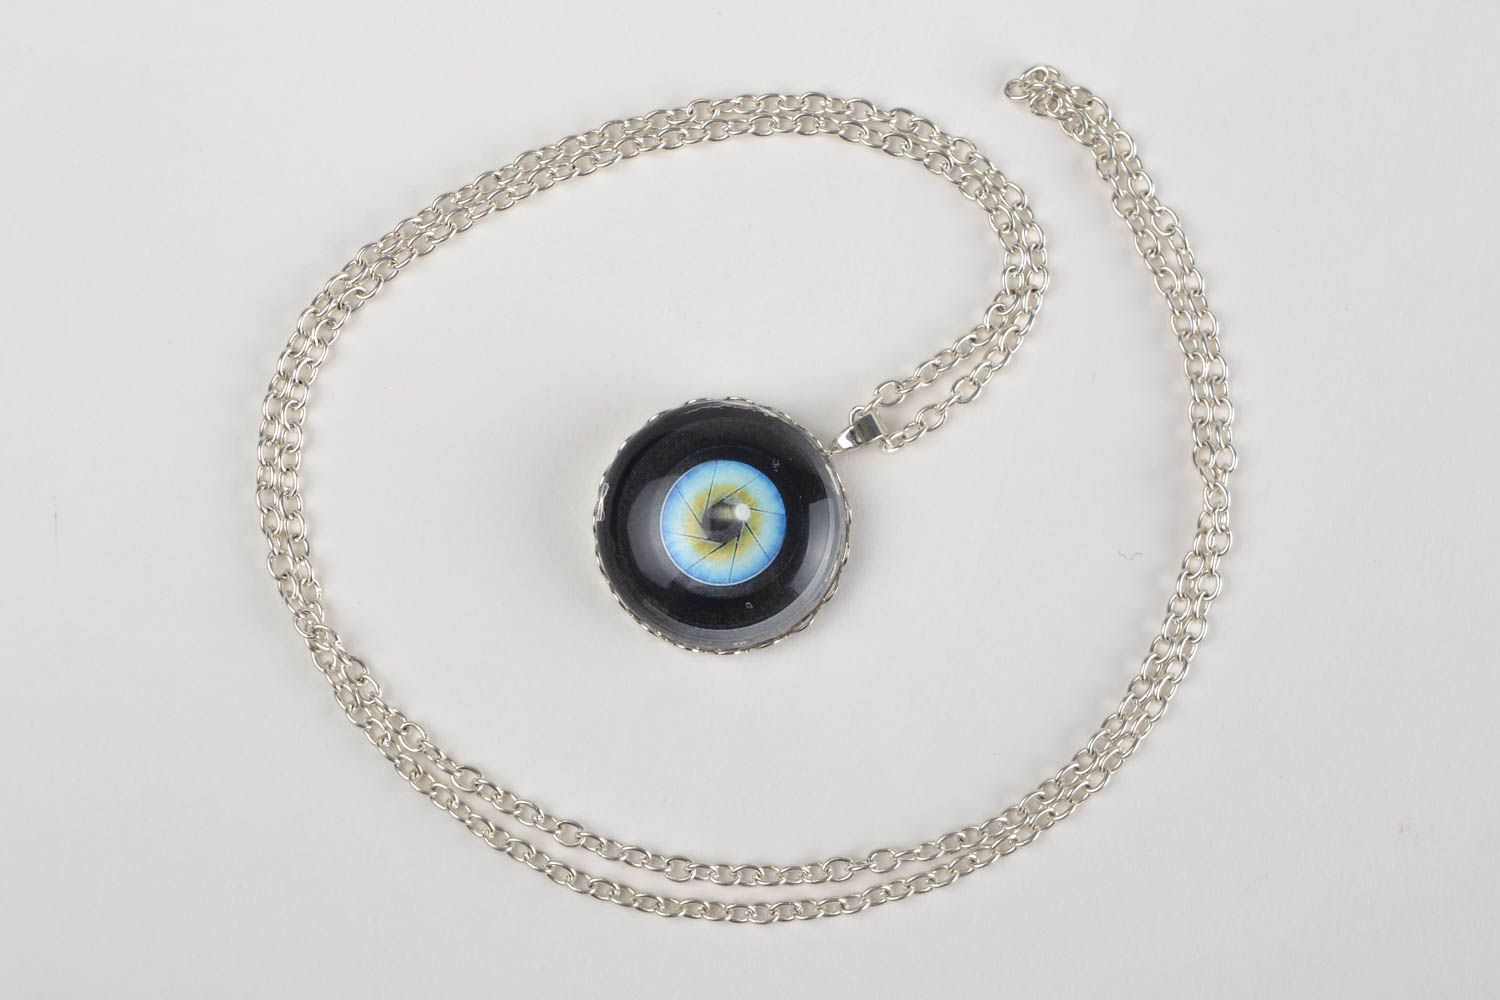 Beautiful handmade designer glass pendant on chain with lens image photo 1